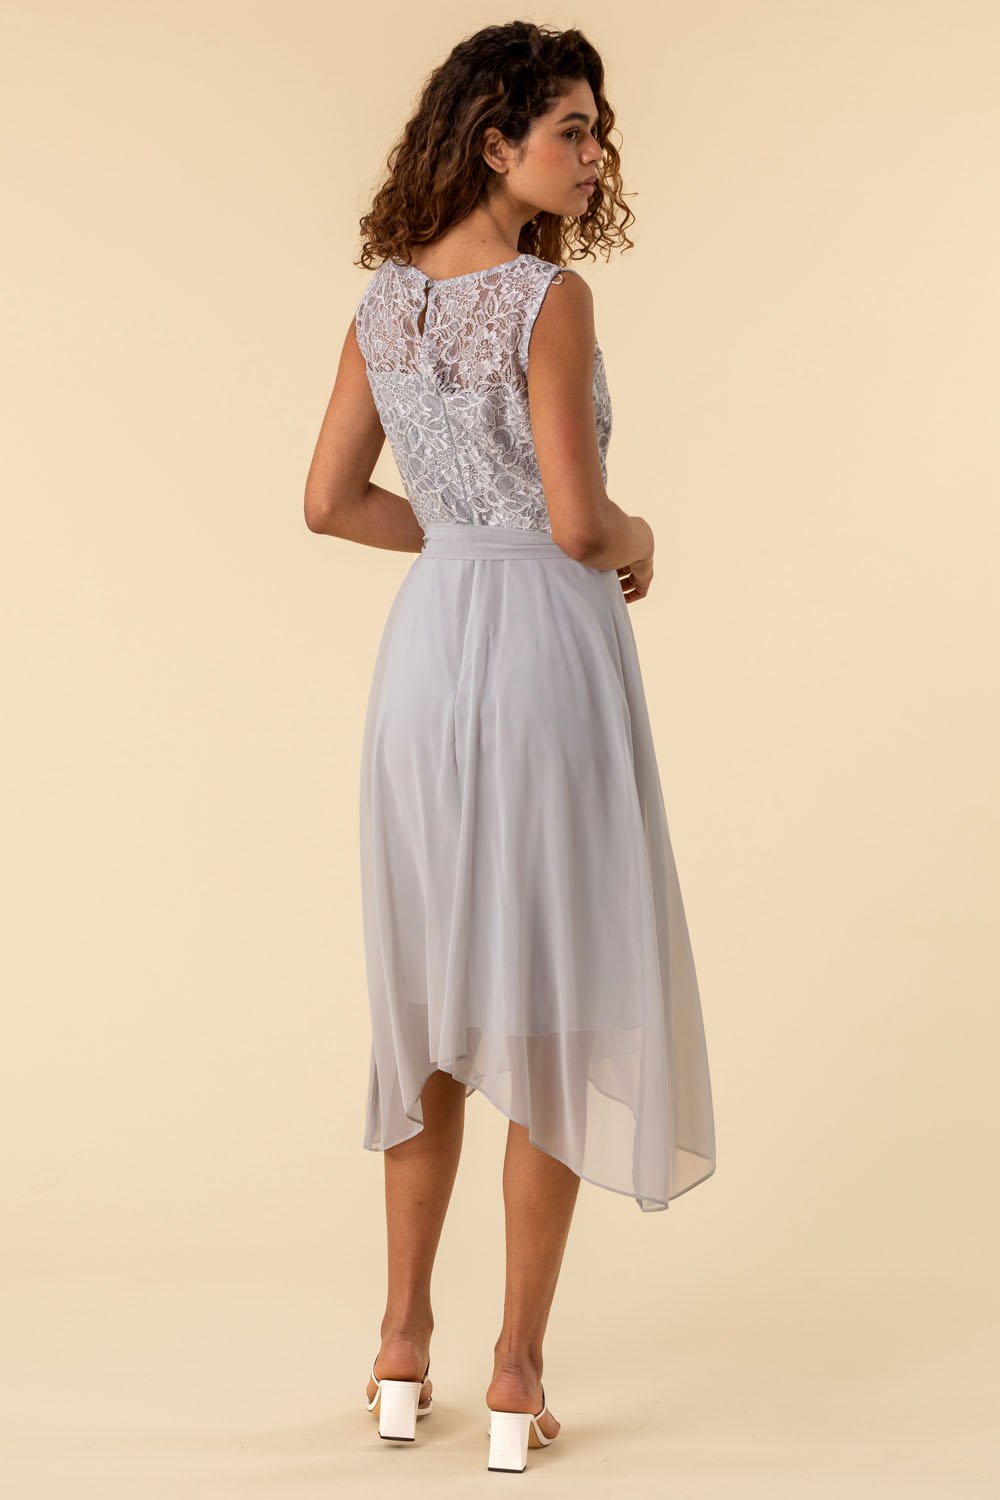 Lace Hanky Hem Dress in Grey - Roman Originals UK